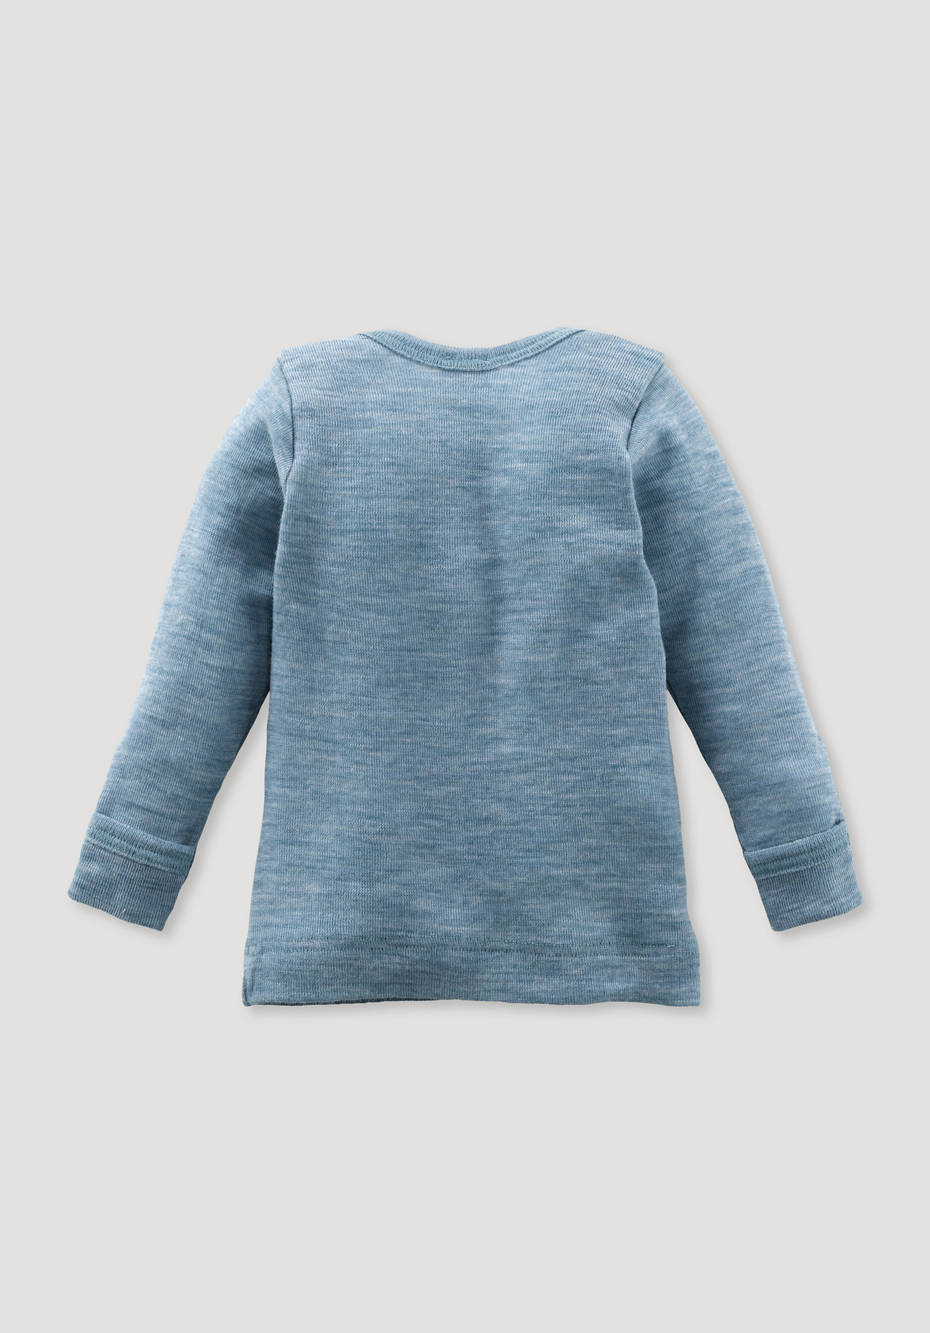 Long-sleeved shirt made from pure organic merino wool